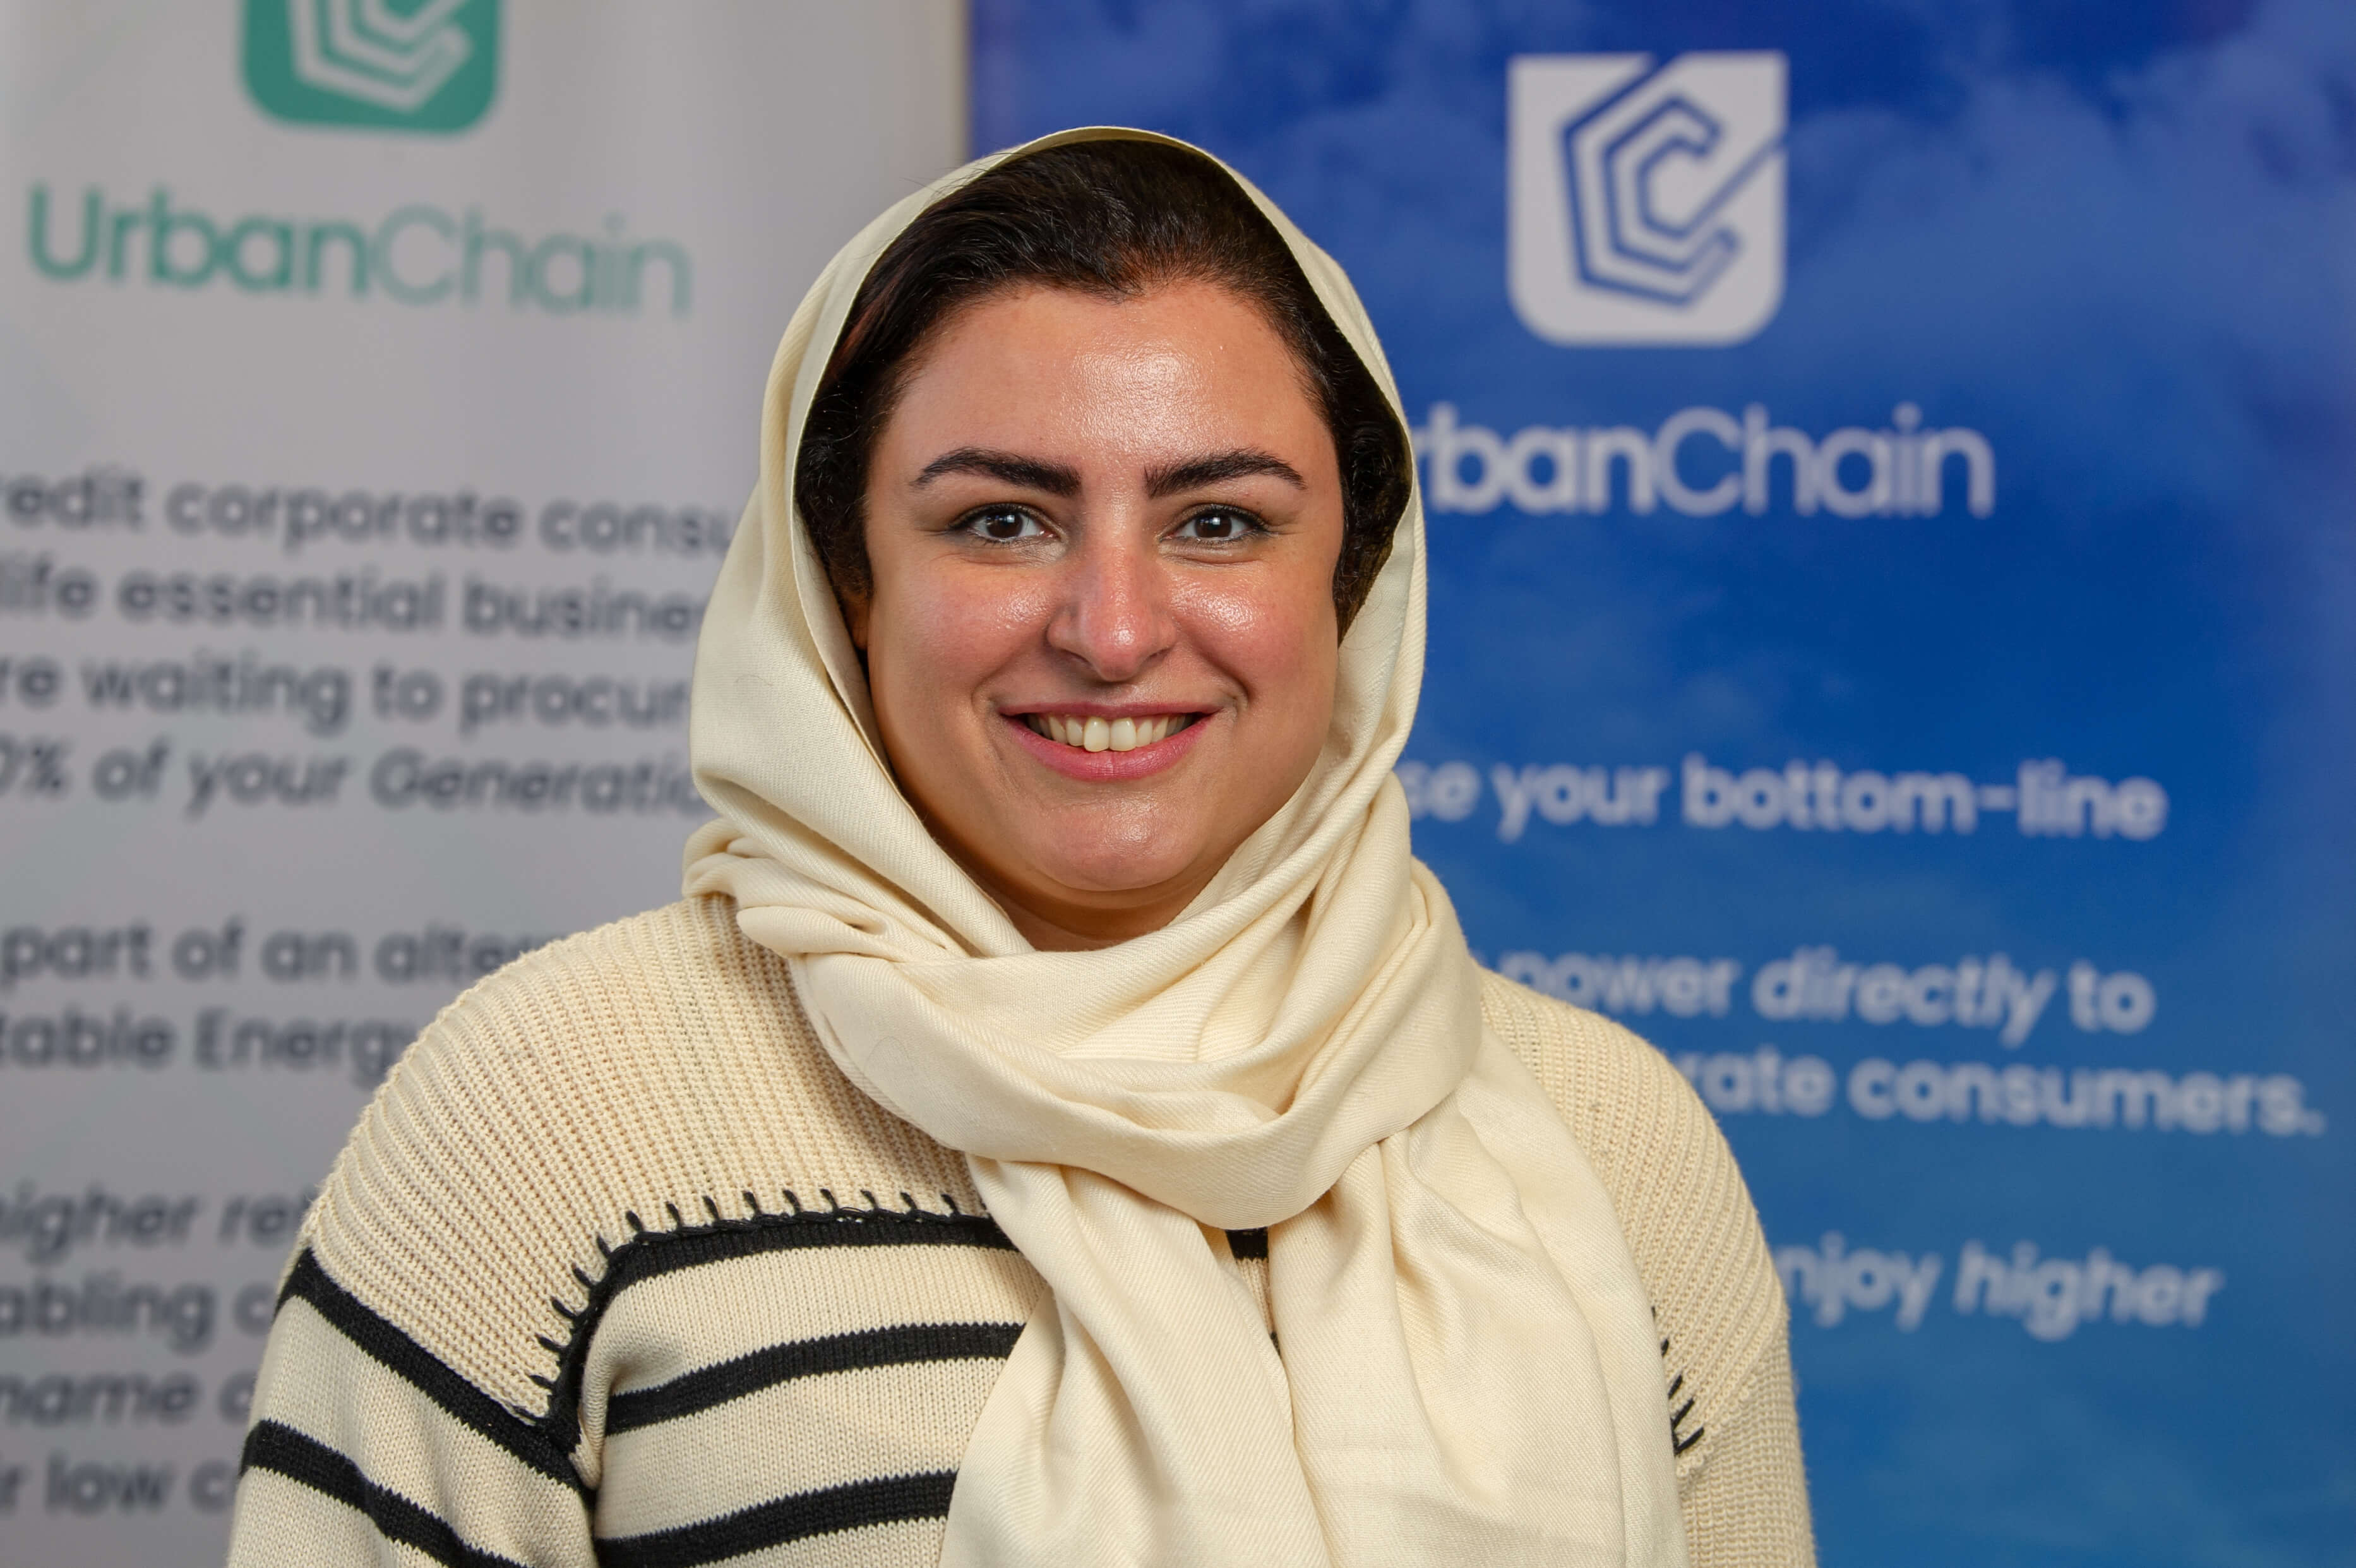 UrbanChain CEO Dr Somayeh Taheri